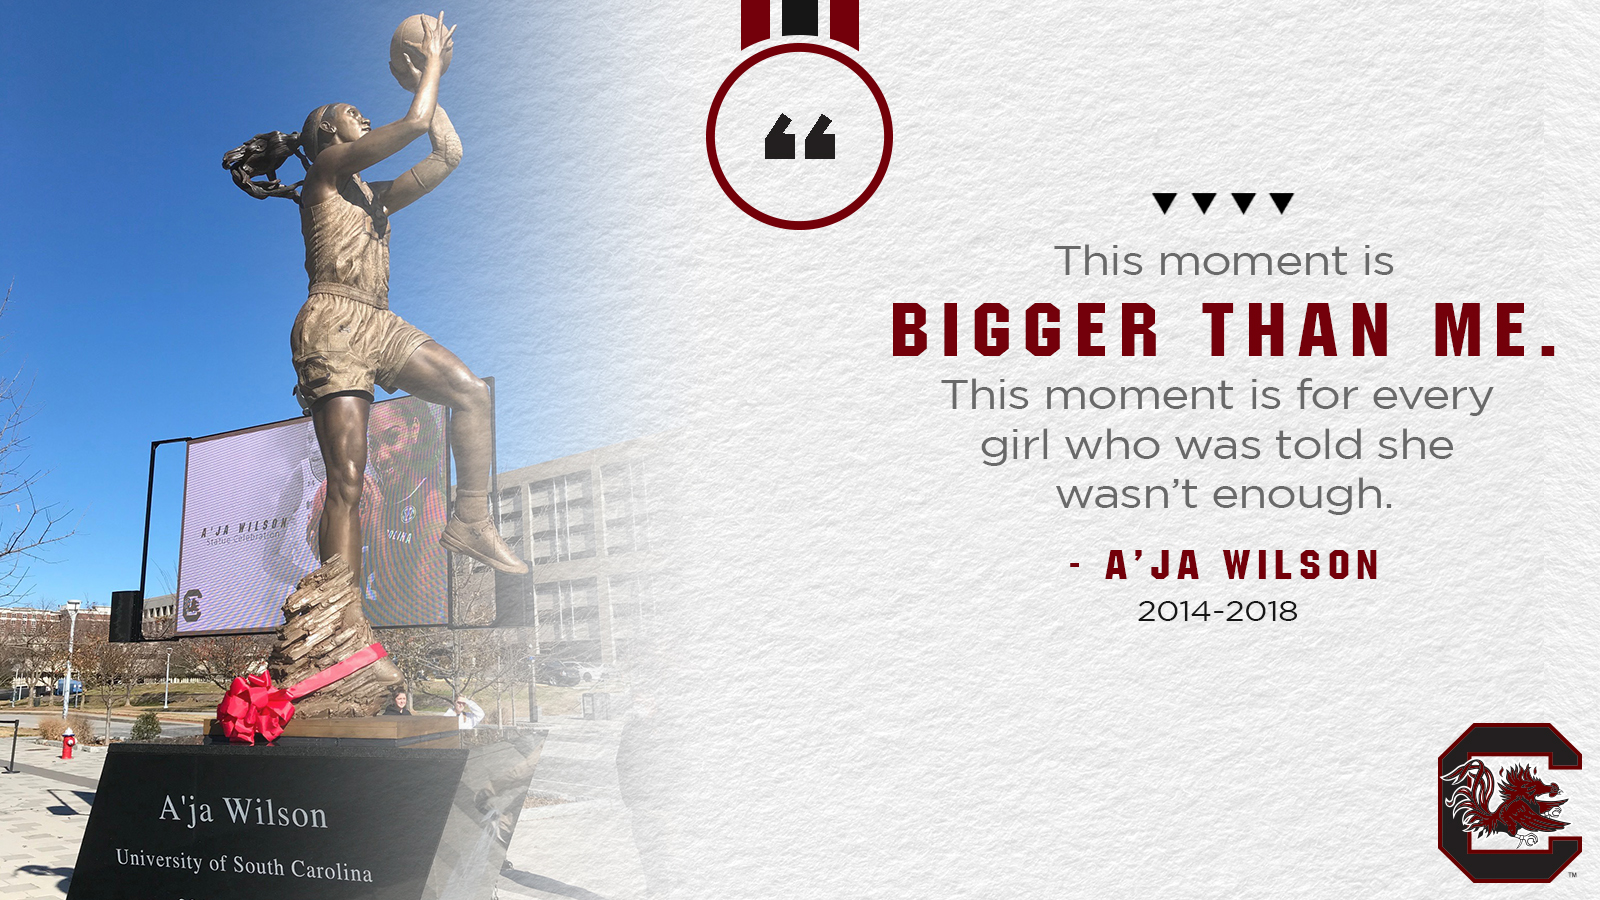 A’ja Wilson Statue is Bigger Than Life, Just Like A'ja